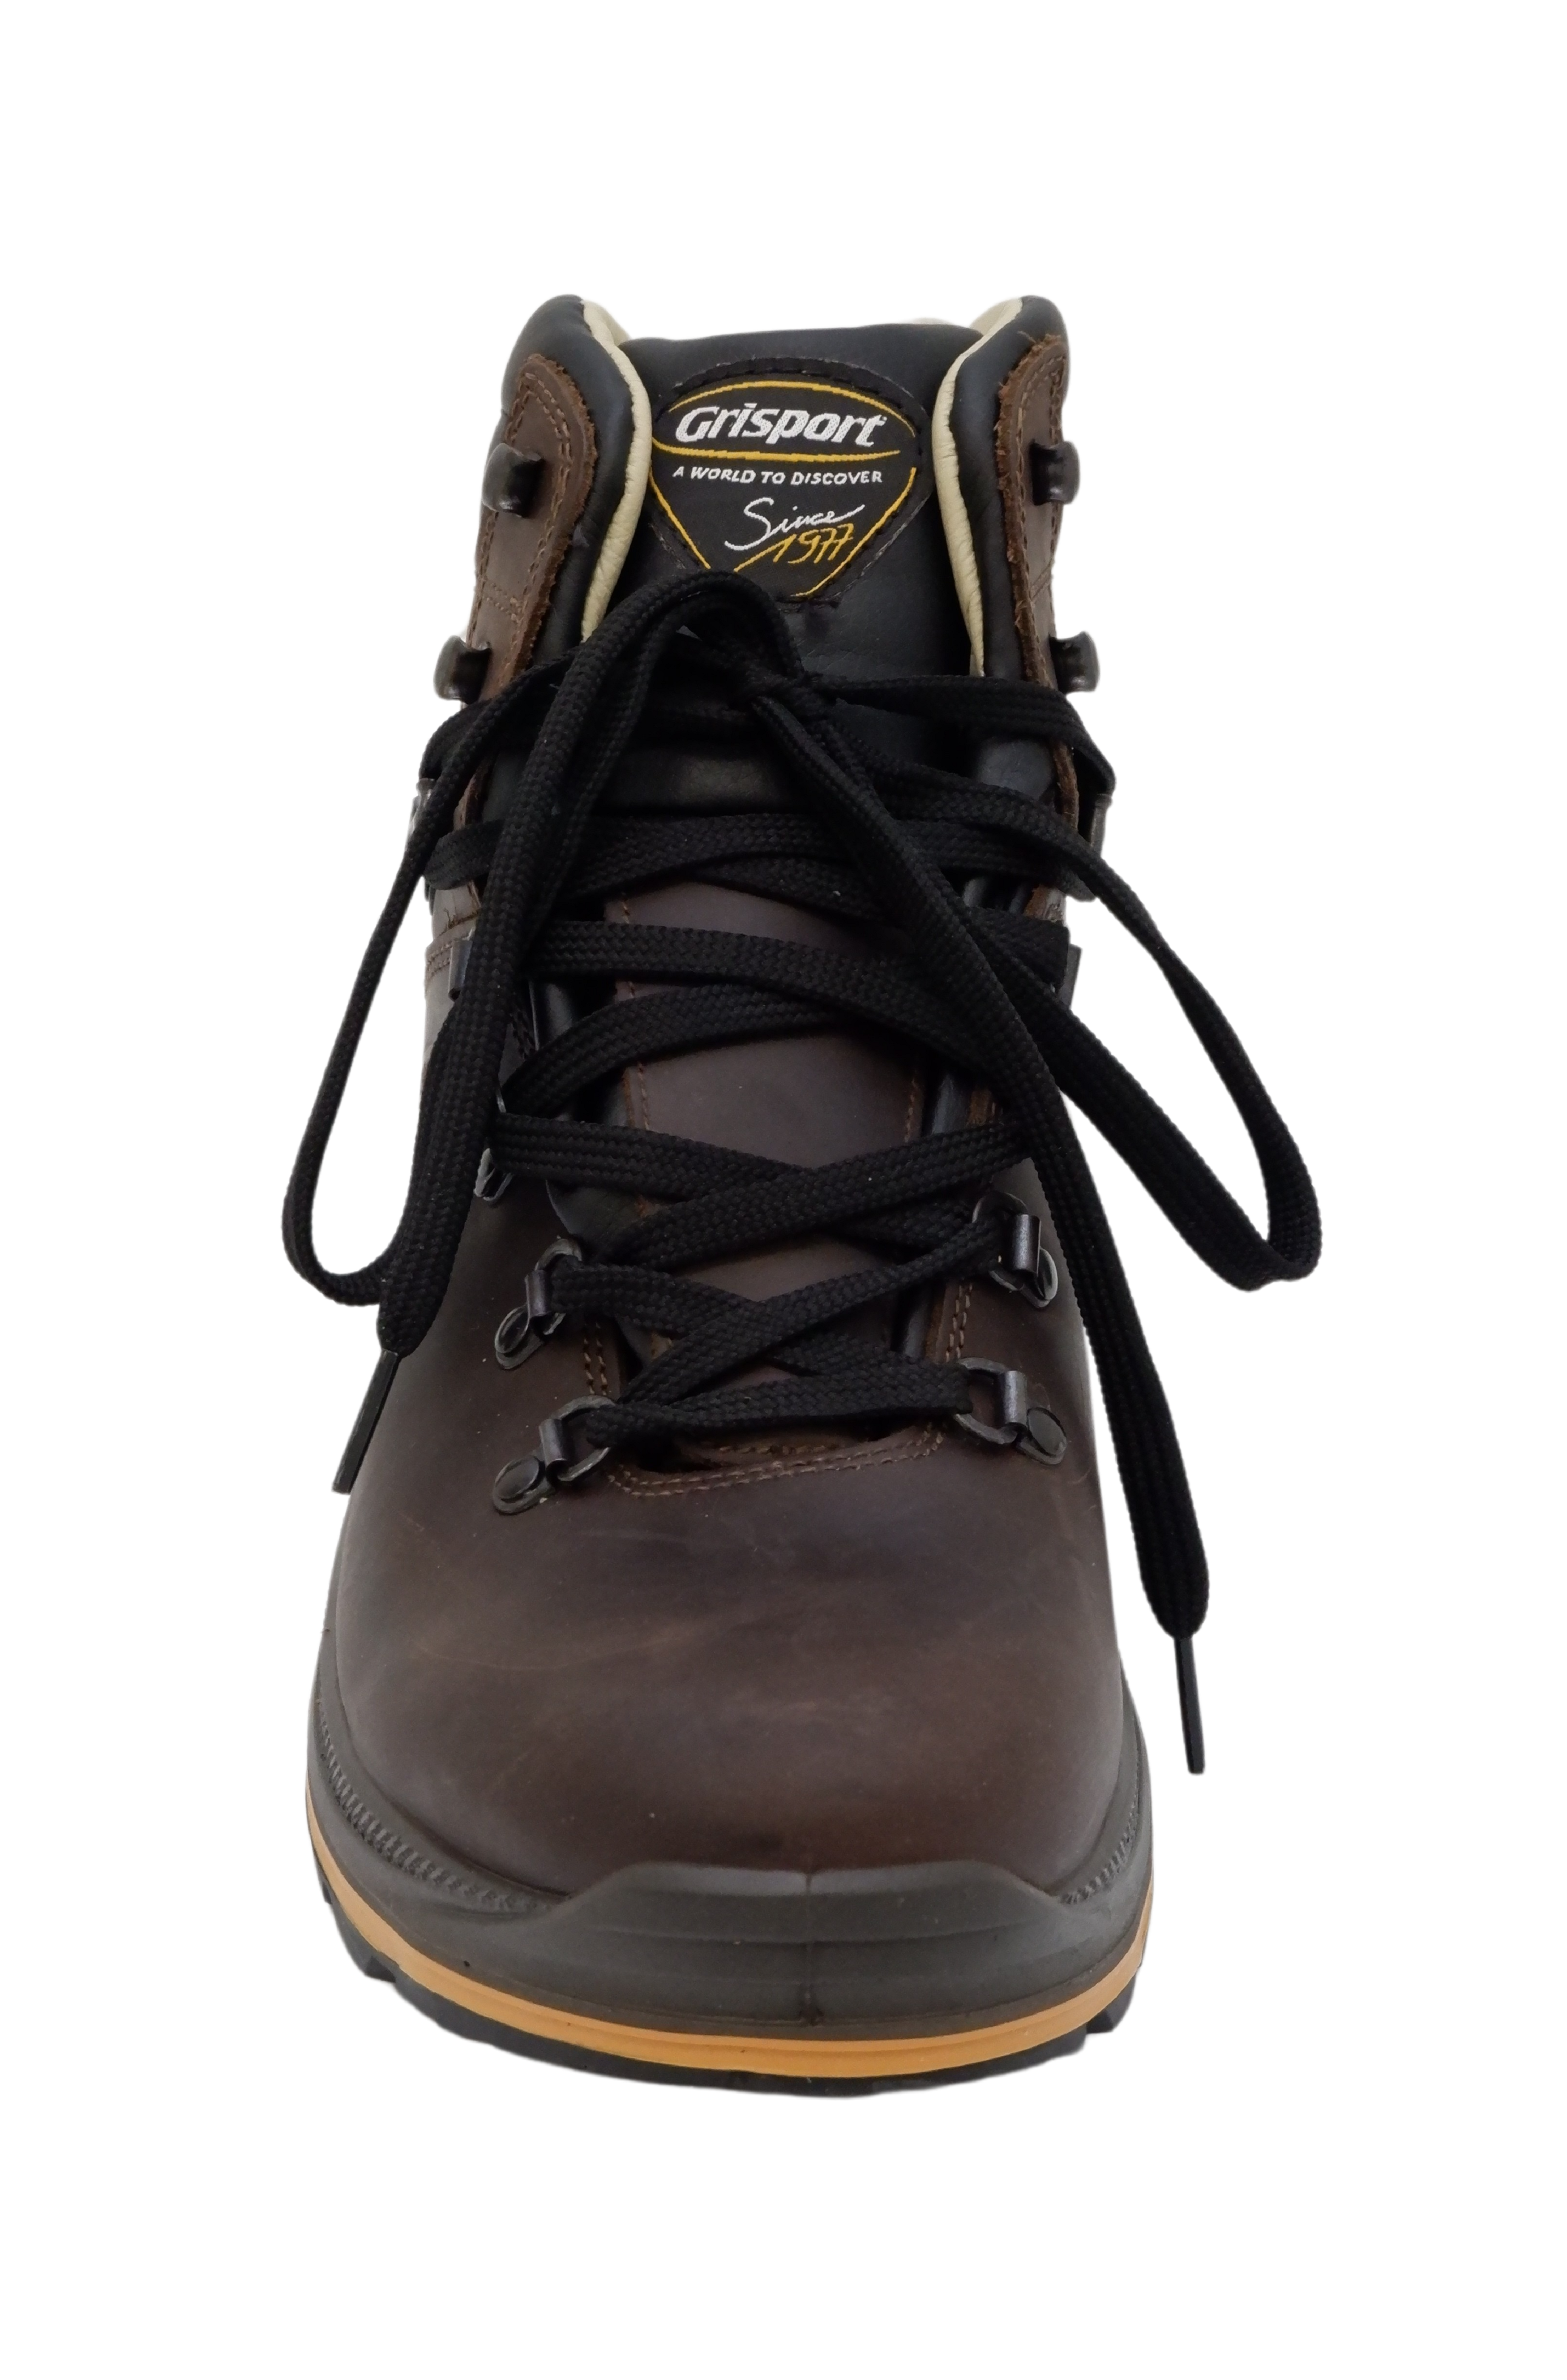 Grisport Women's Quatro Hiking Boot, Brown, 6 : Grisport